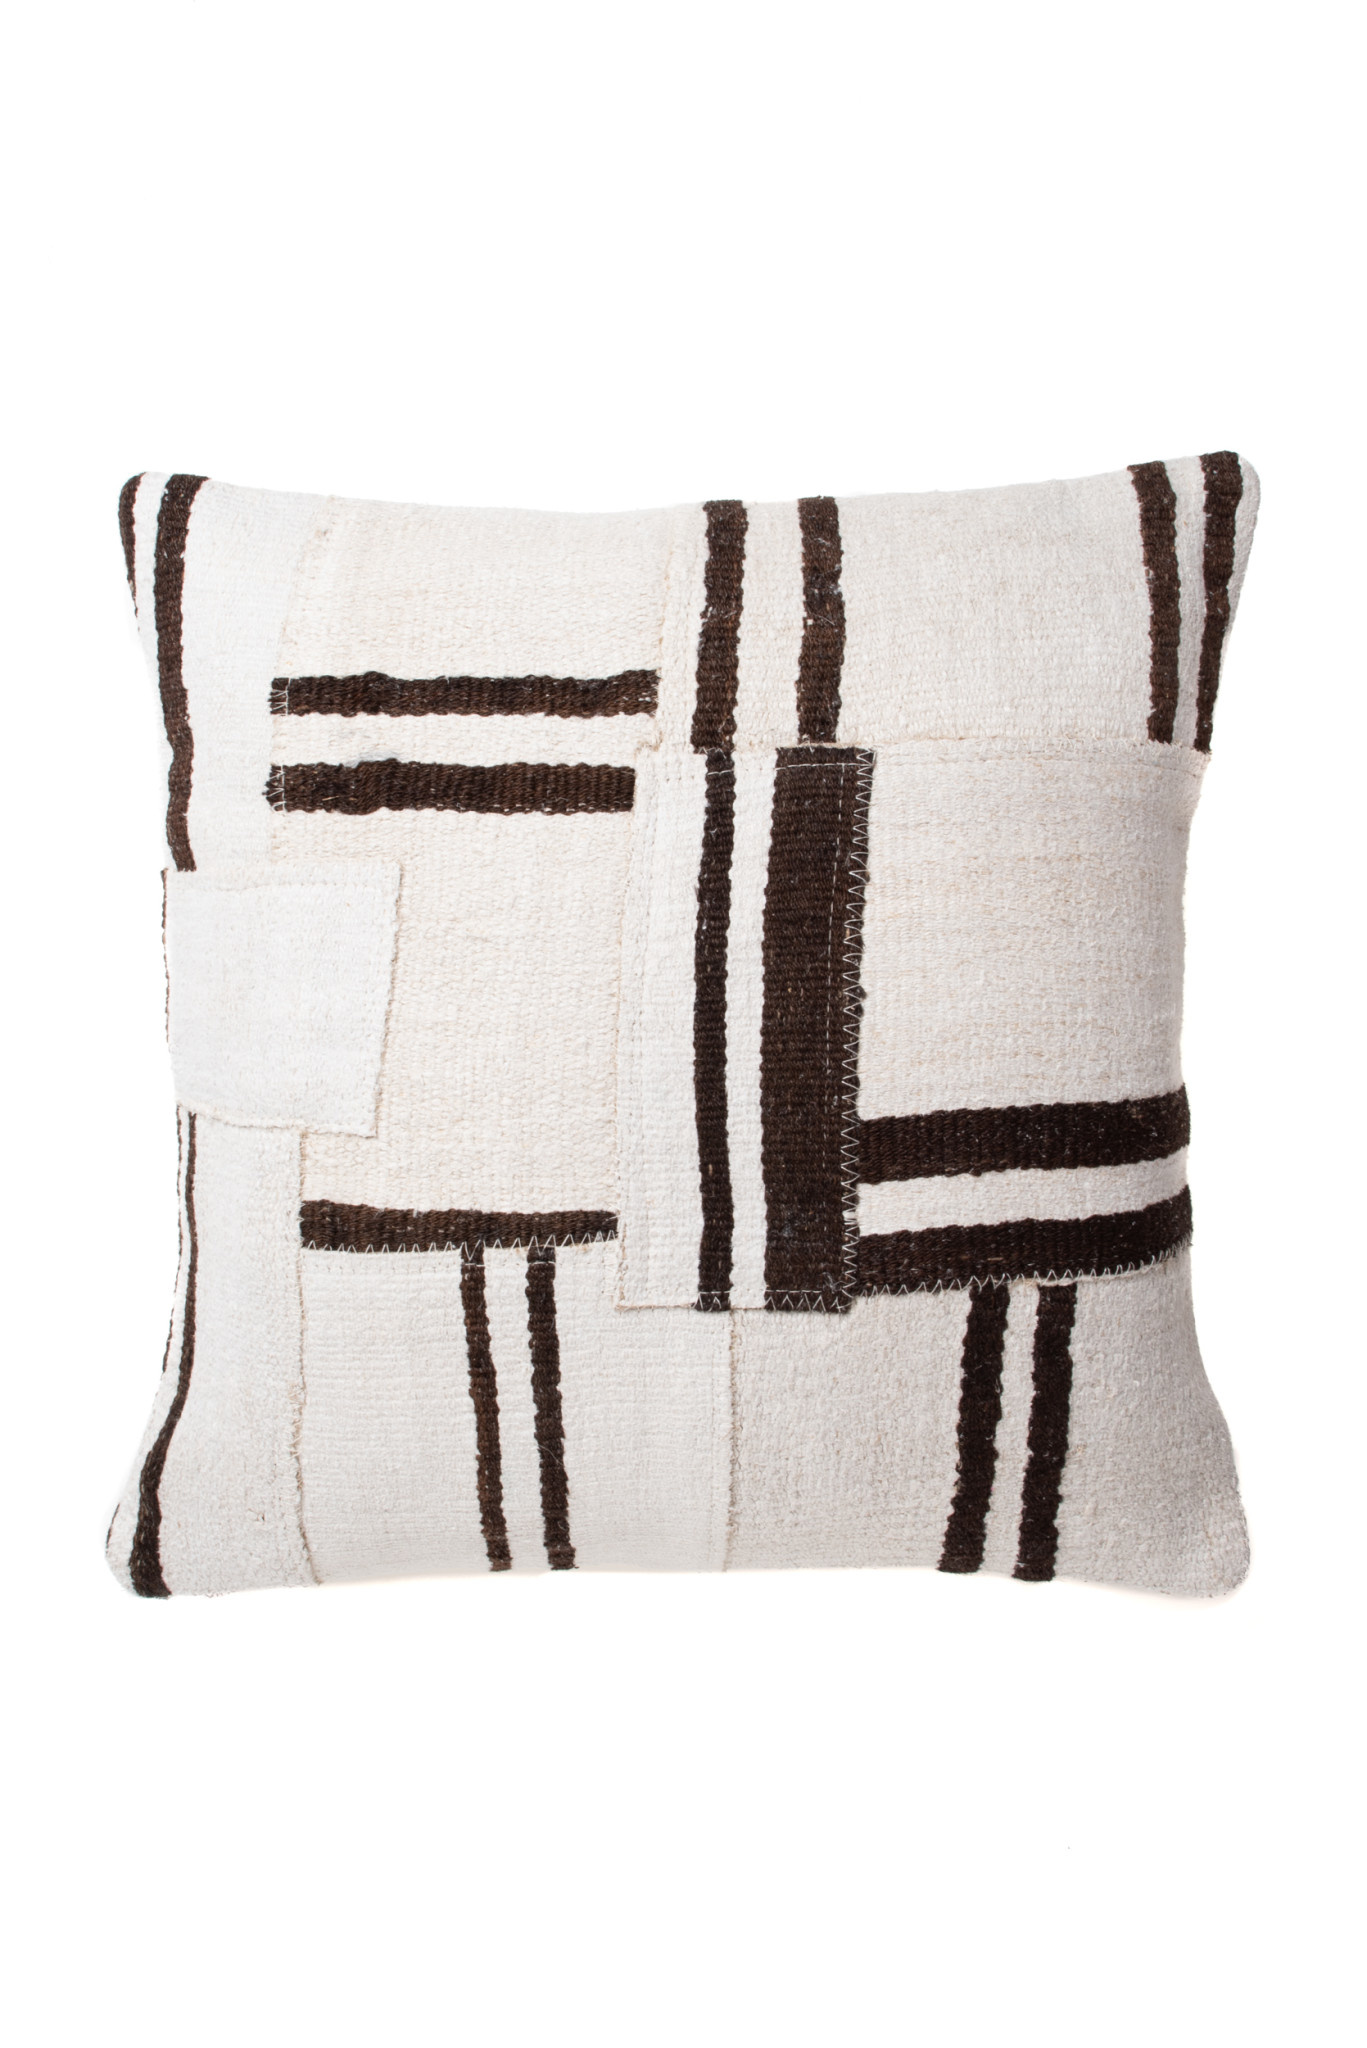 Kilim Cushion Ecru With Brown Stripes 60 X 60cm Turkey Couleur Locale